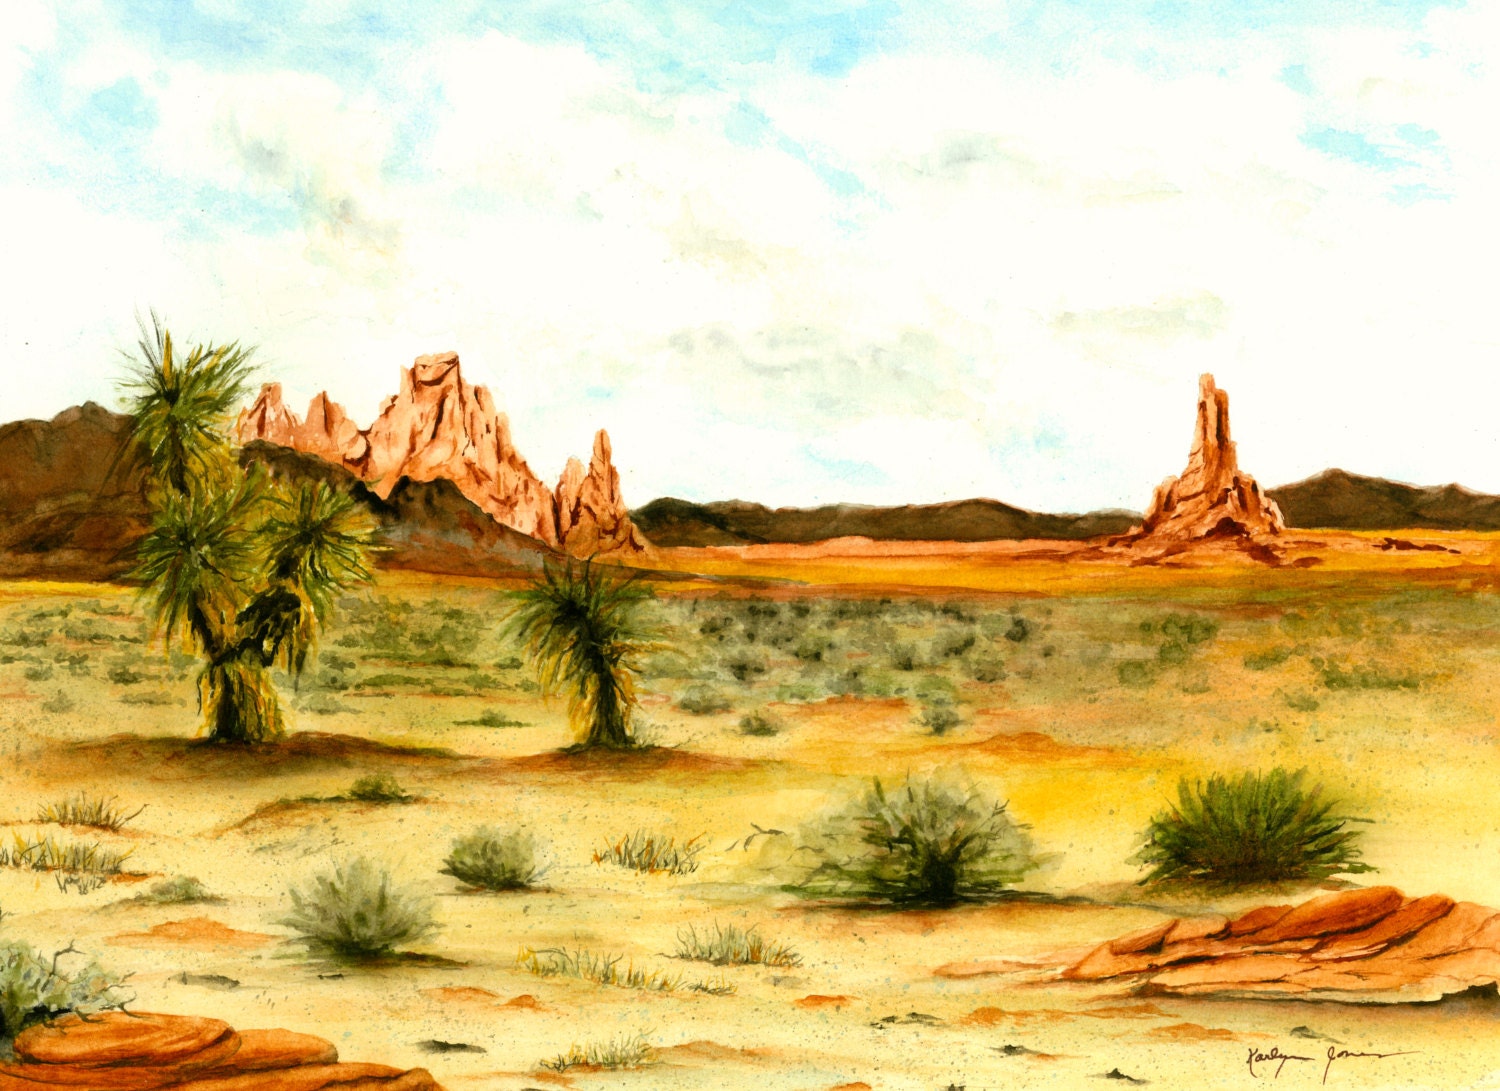 Desert Southwest Landscape Painting Print from Original